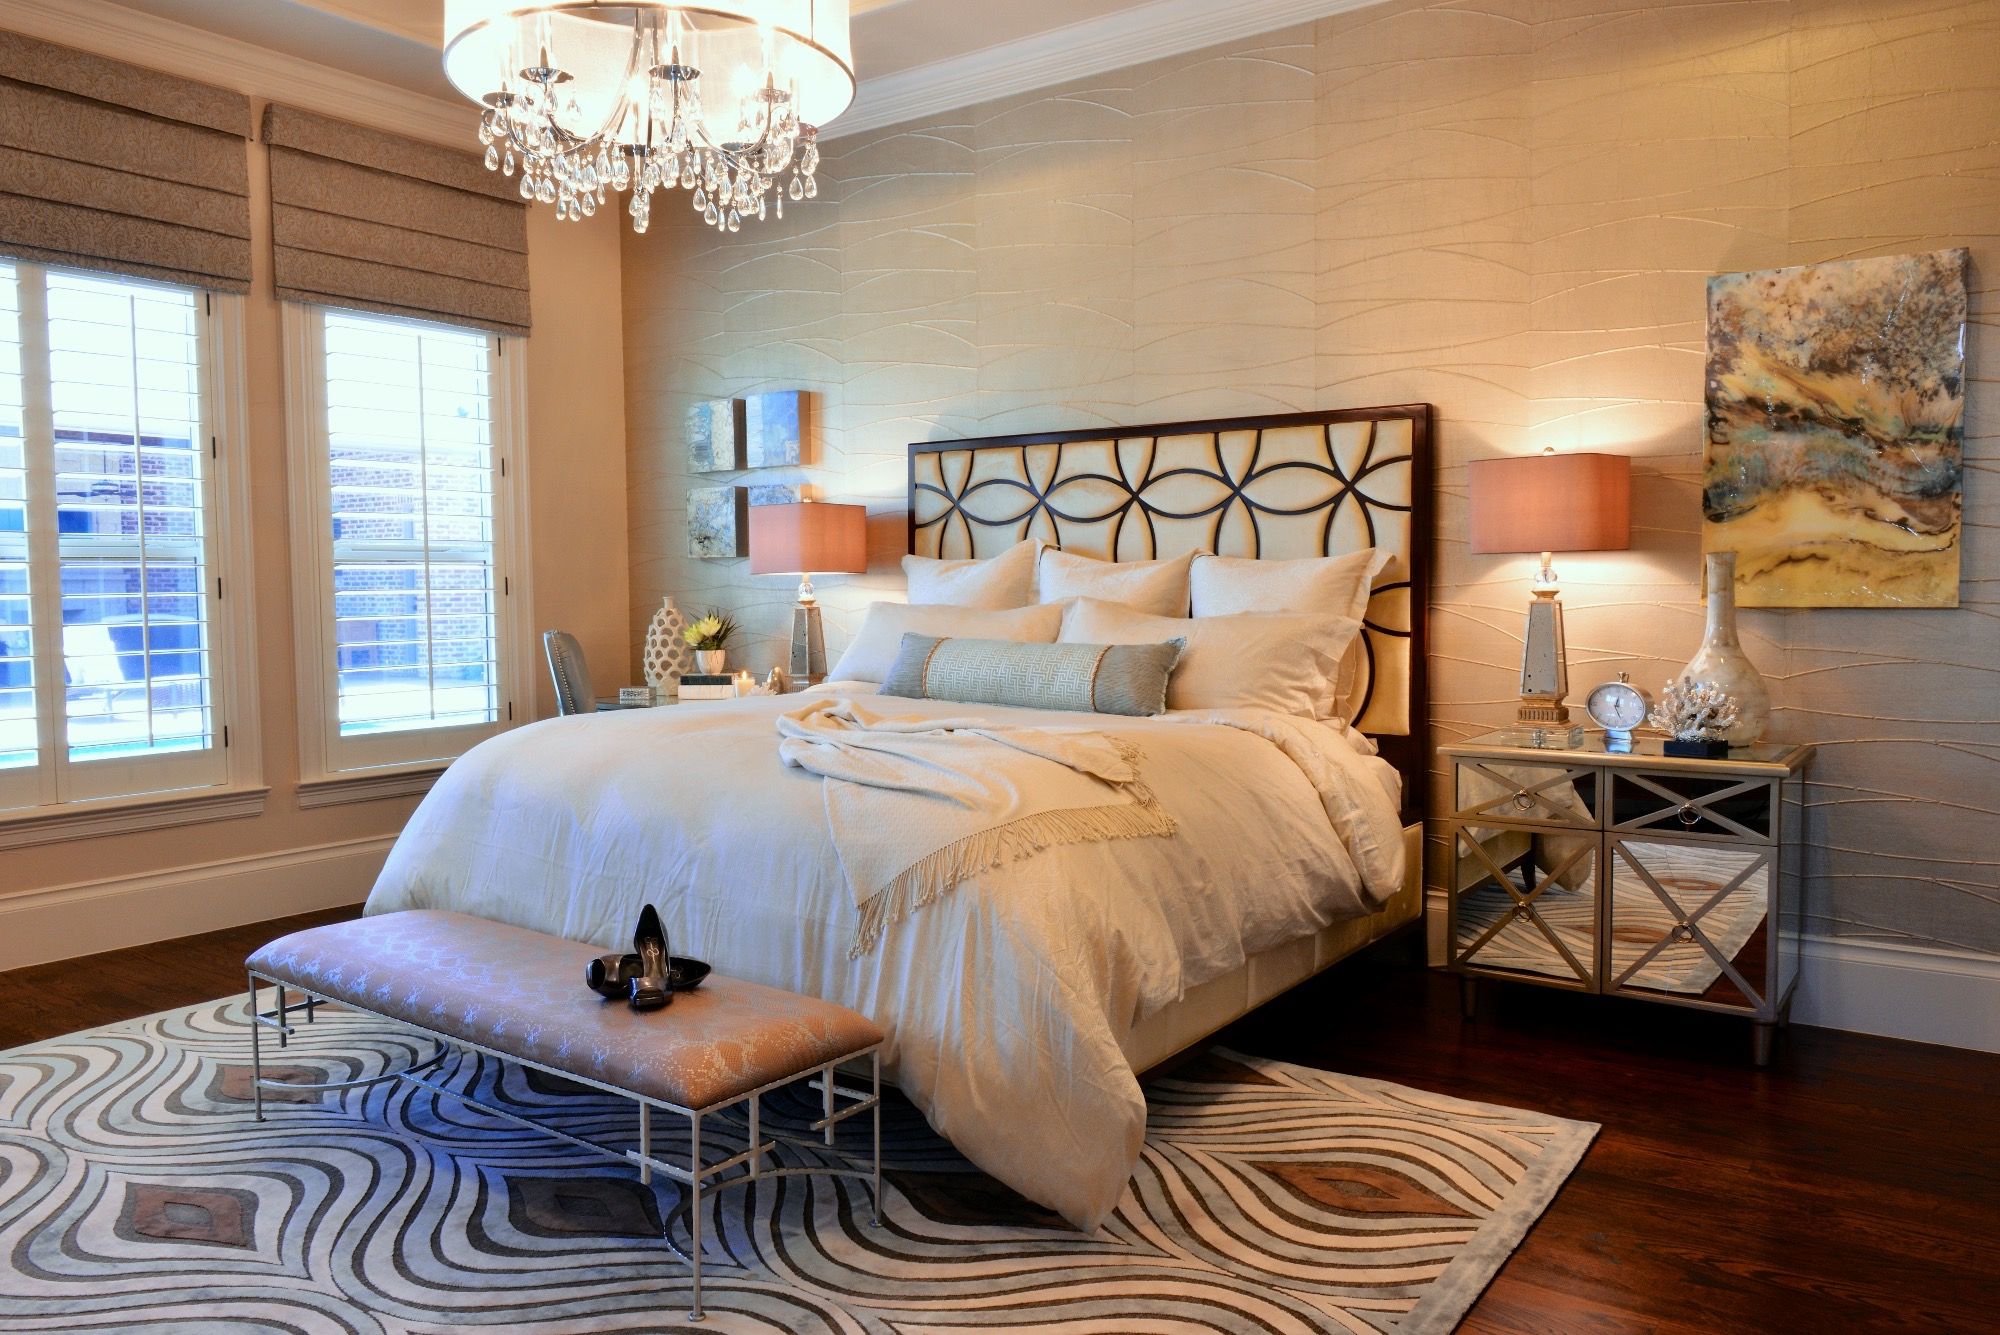 Master Bedroom Decor Ideas - Create A Focal Point